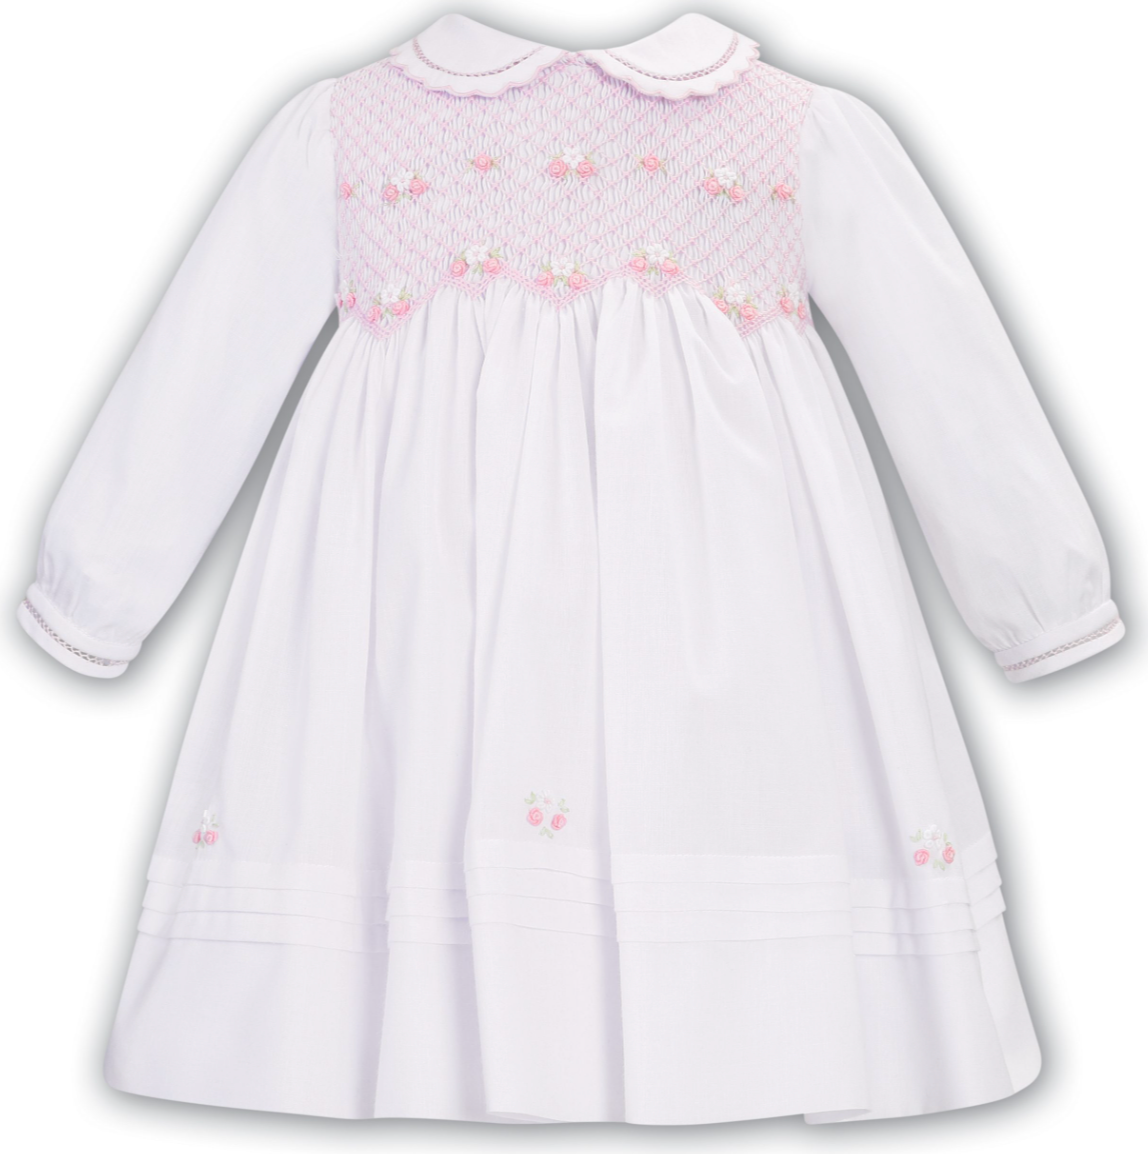 White/Pastel Pink Smocked Long Sleeve Dress